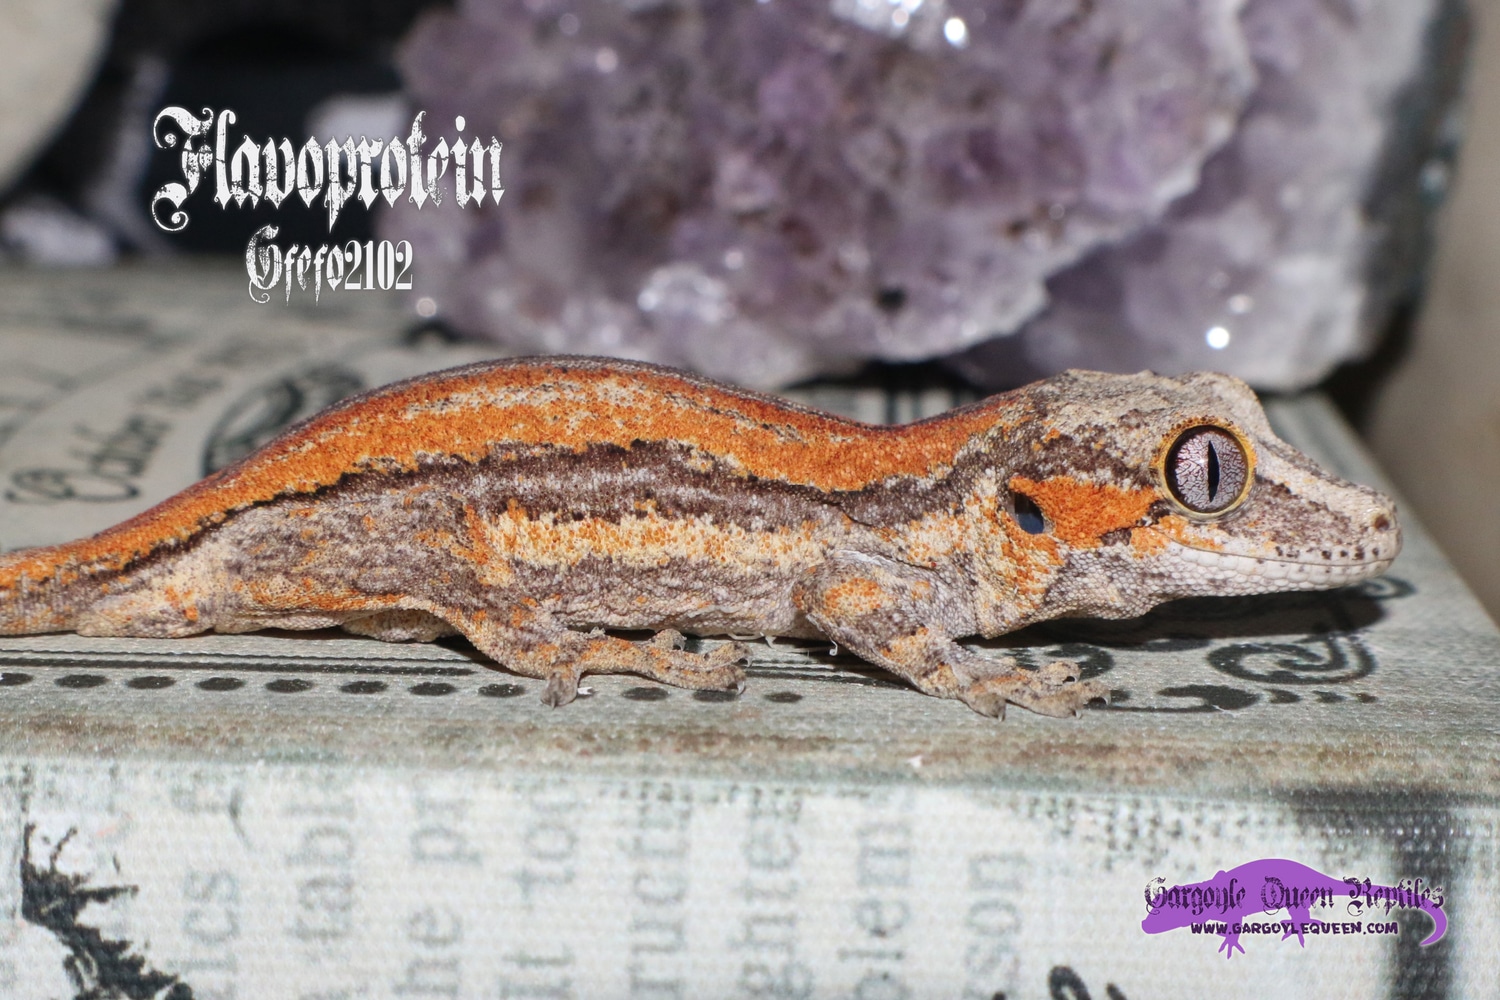 "Flavoprotein" Red/Orange Bacon Stripe Gargoyle Gecko by Gargoyle Queen Reptiles